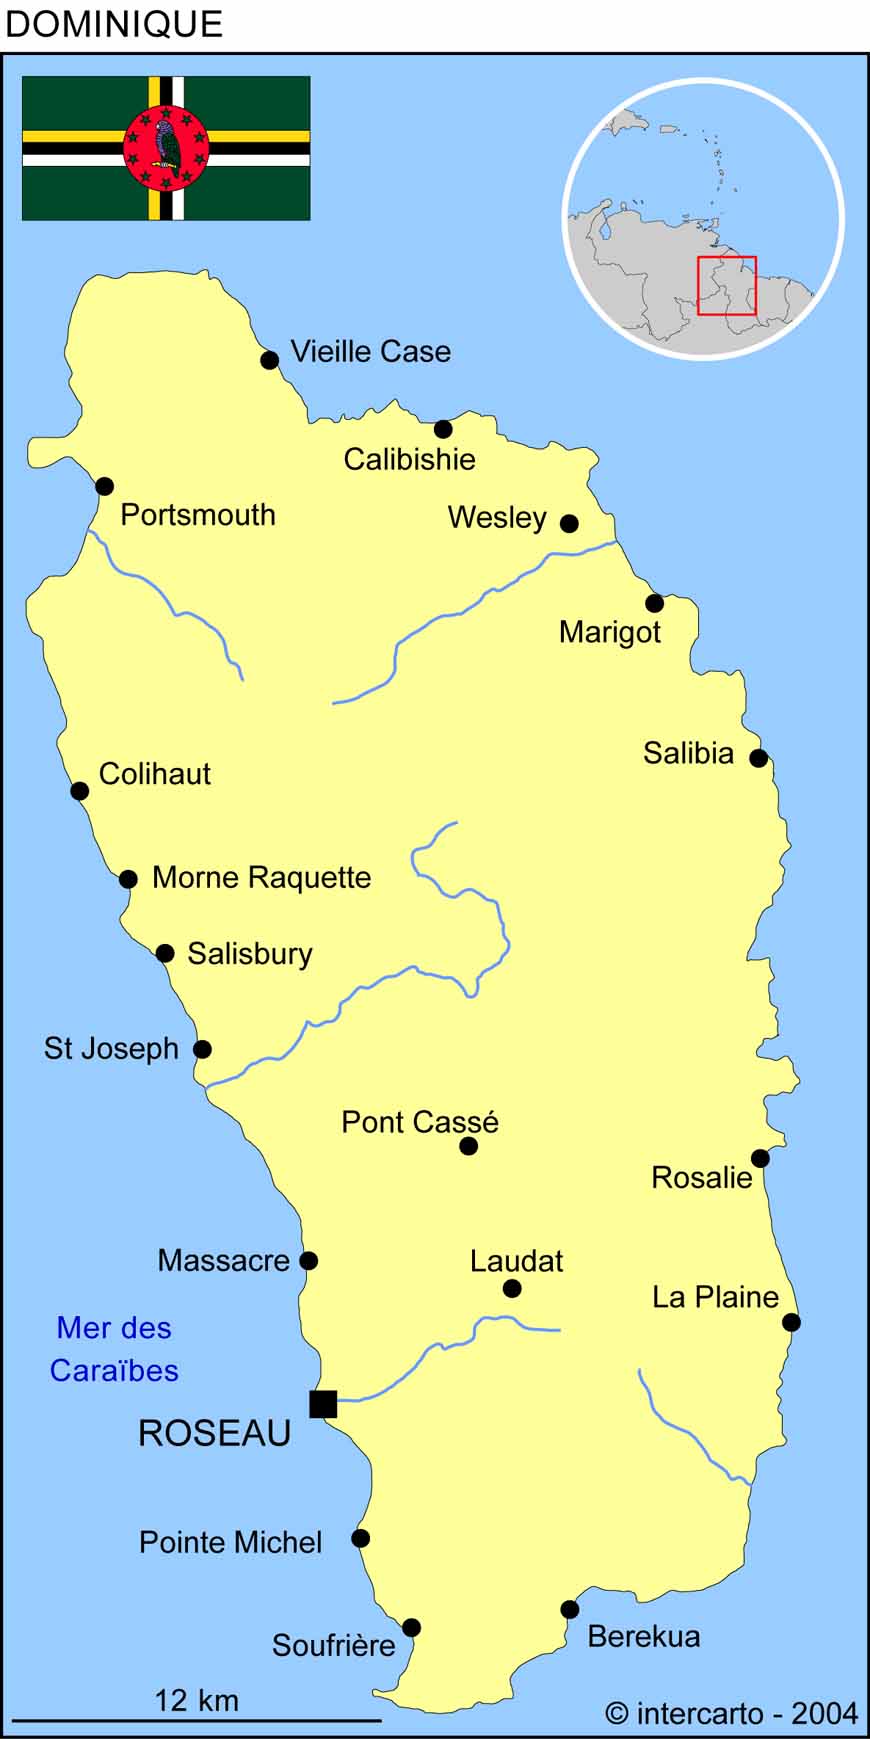 Carte de La Dominique